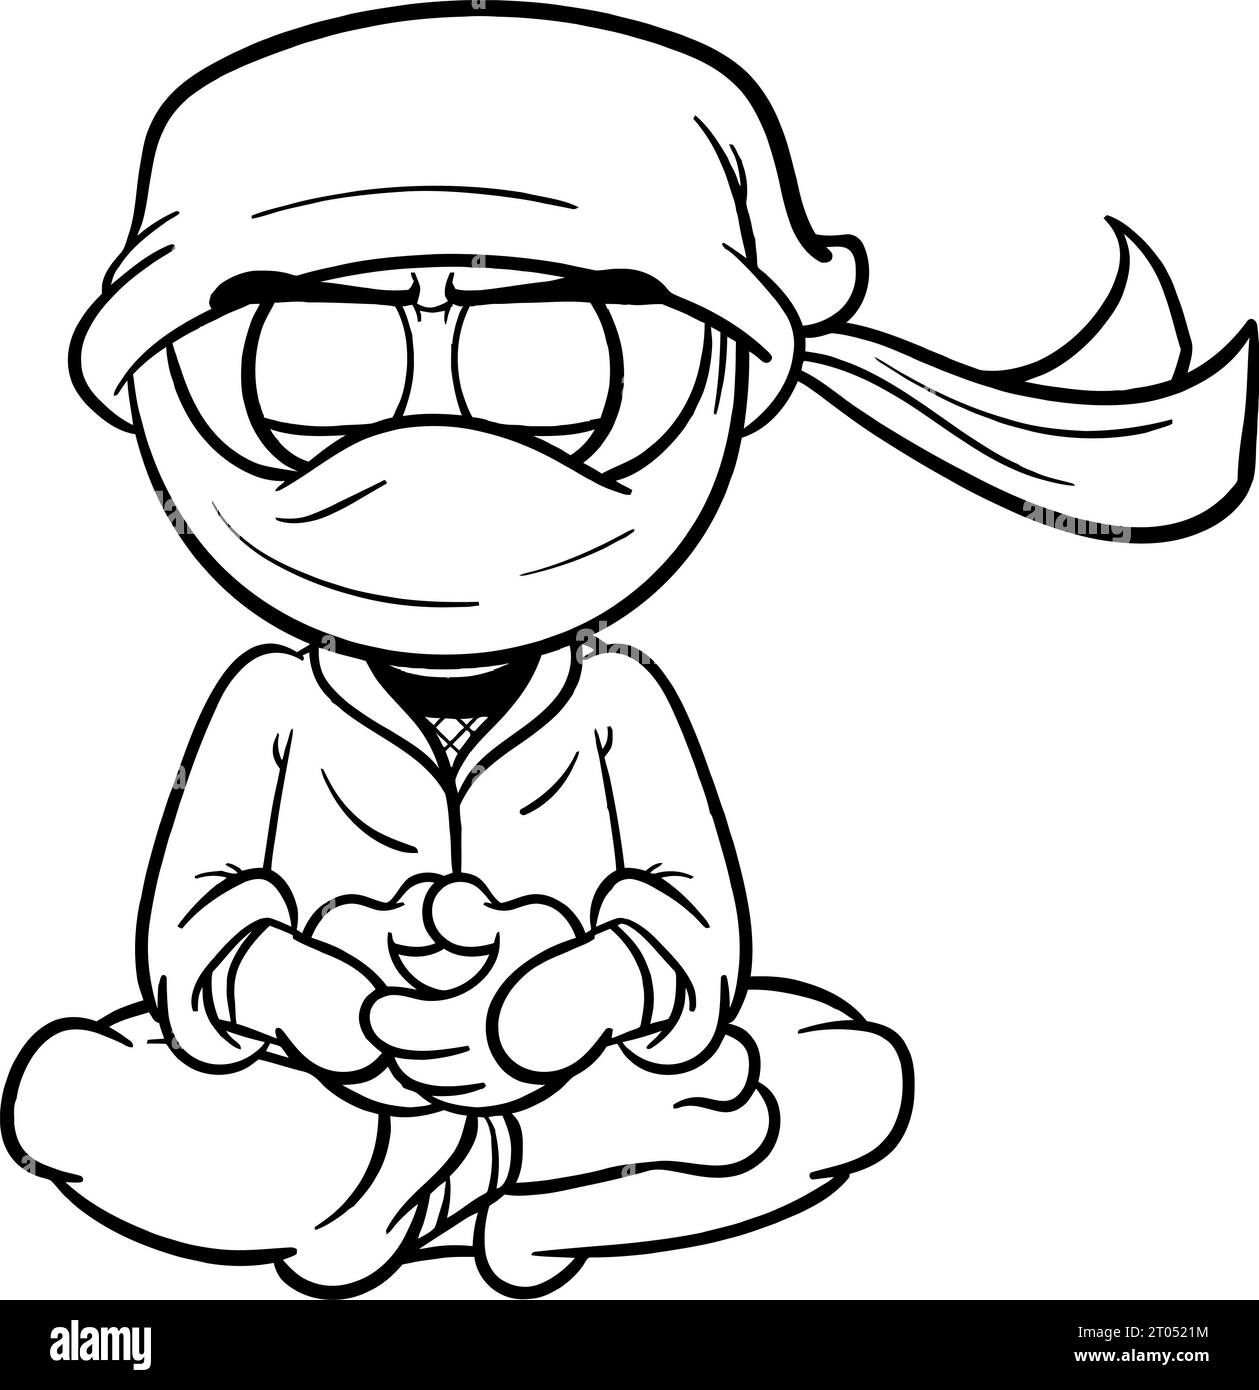 Meditating cartoon ninja coloring page for kids Stock Photo